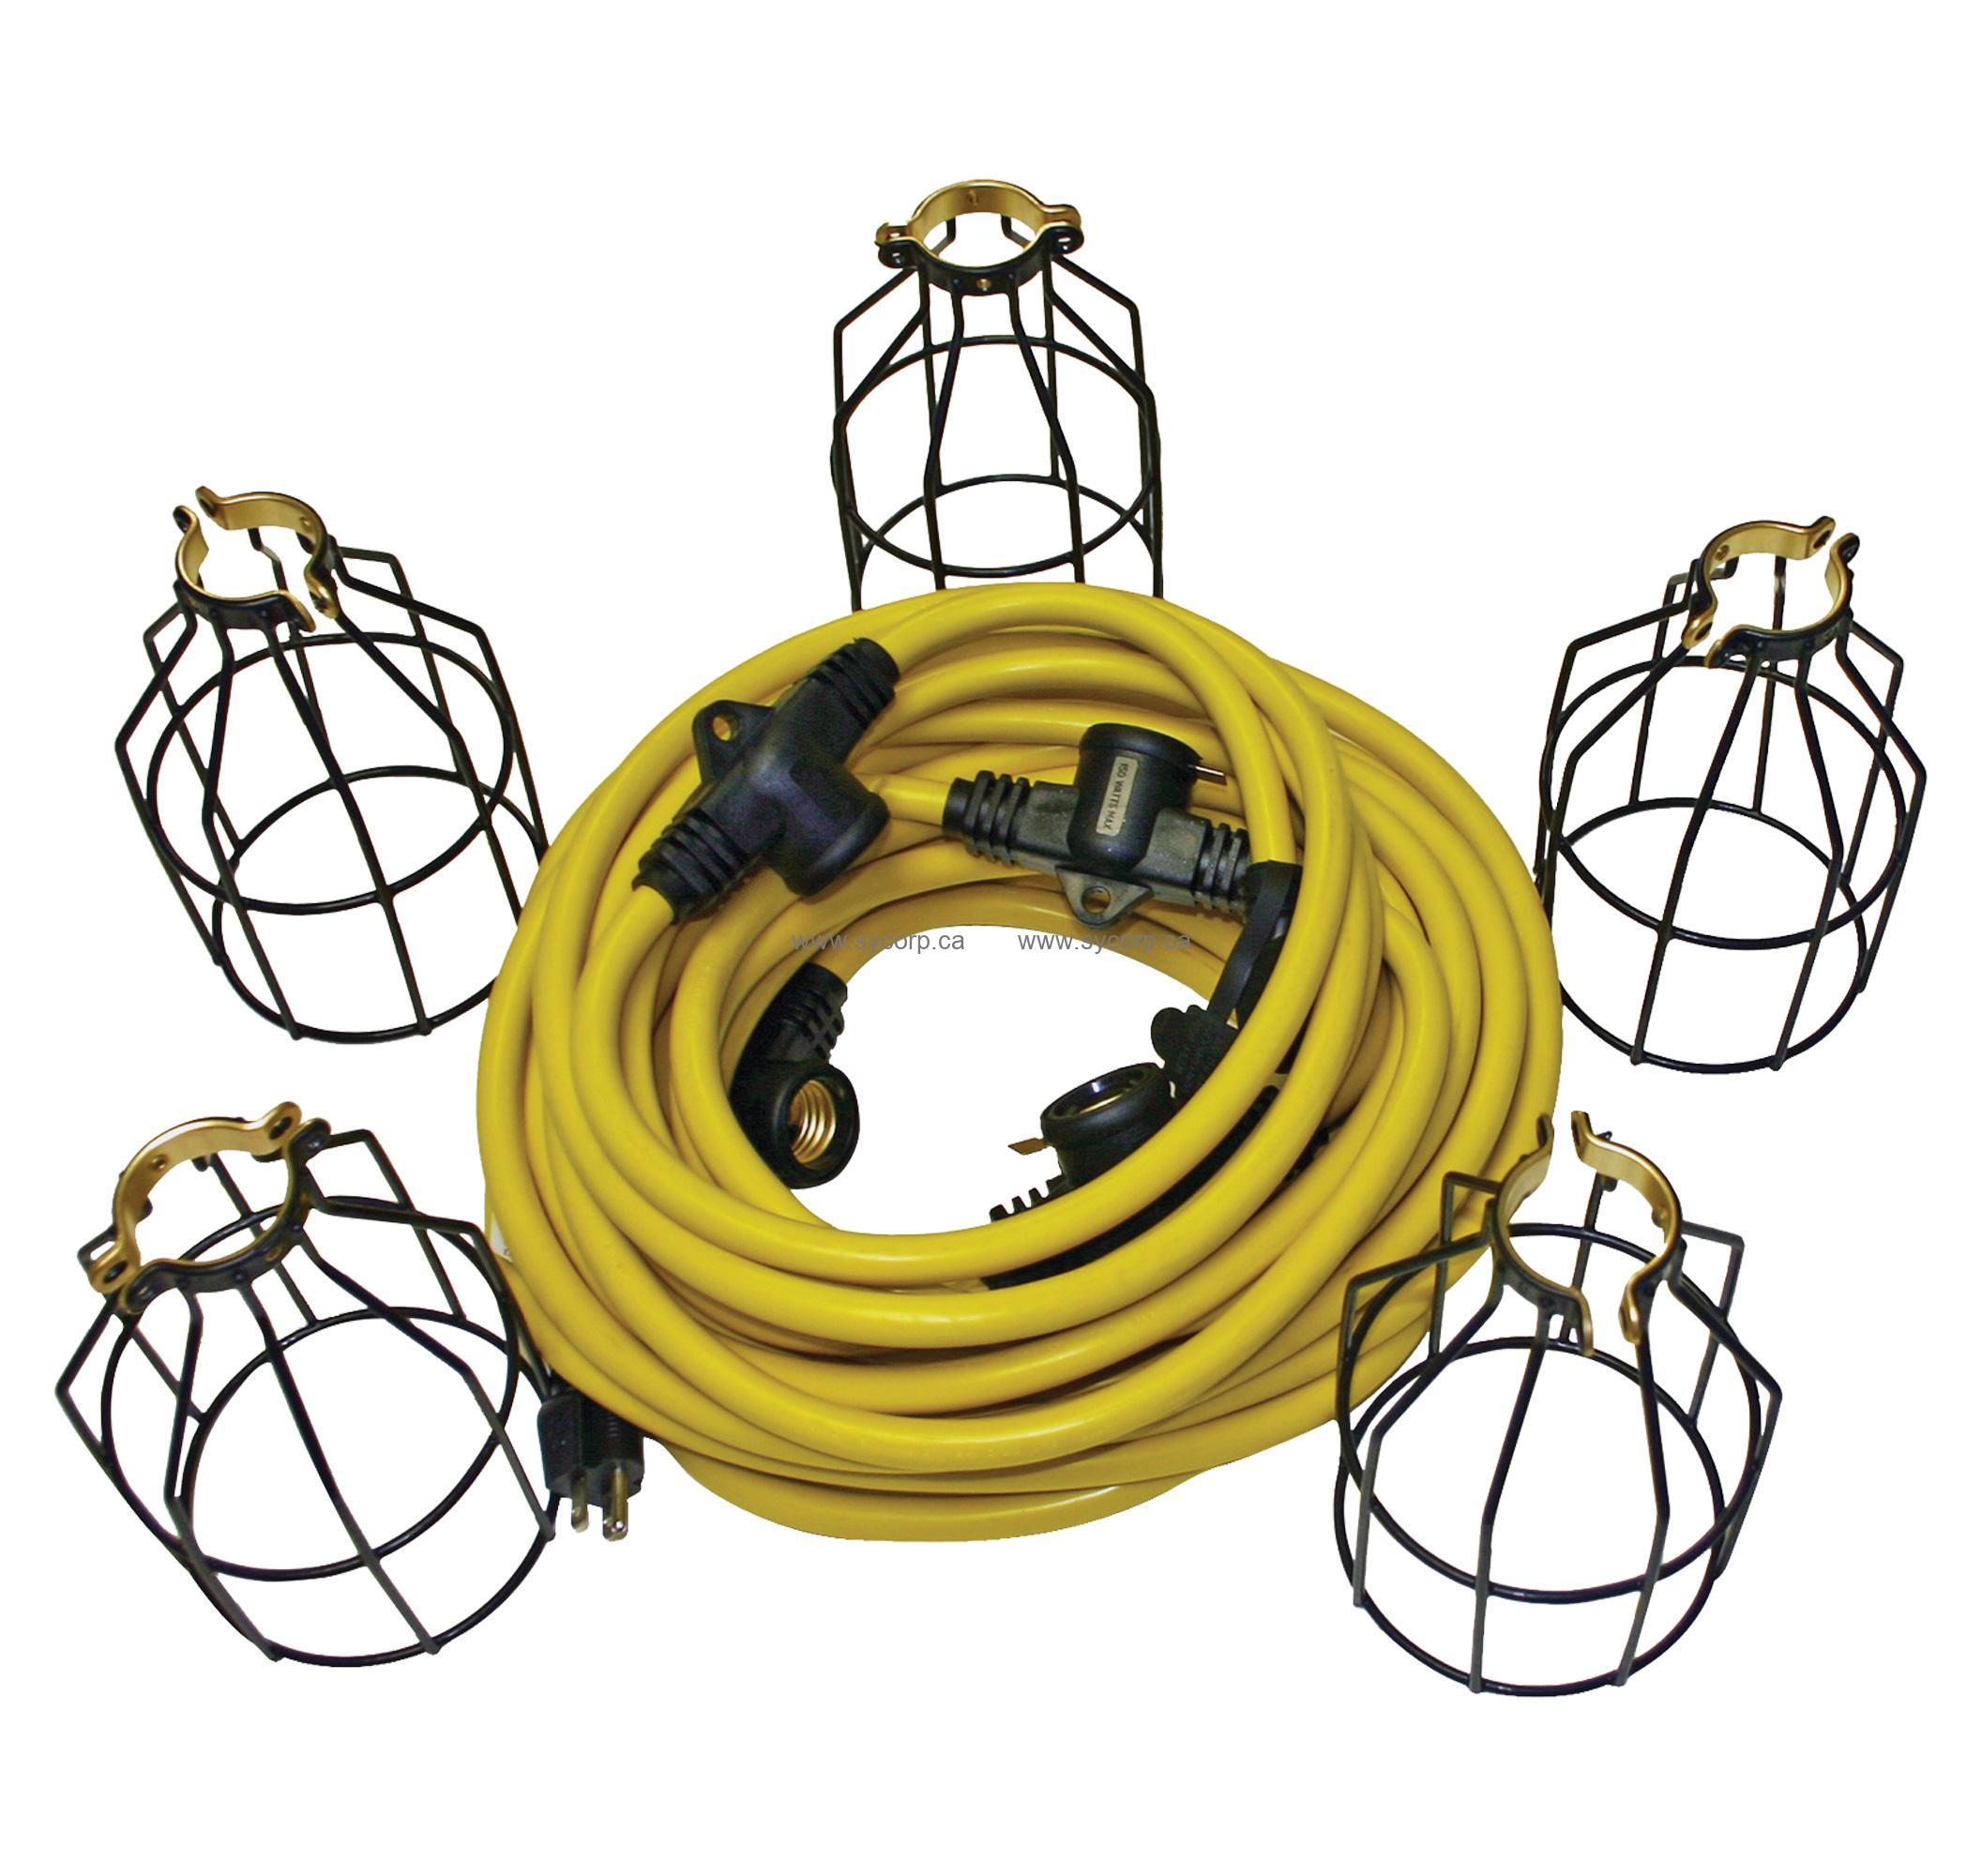 Unex String Work Lights, 50ft, 5 Steel Cage Sockets, 12/3 SJTW Cable,  EC123300-06